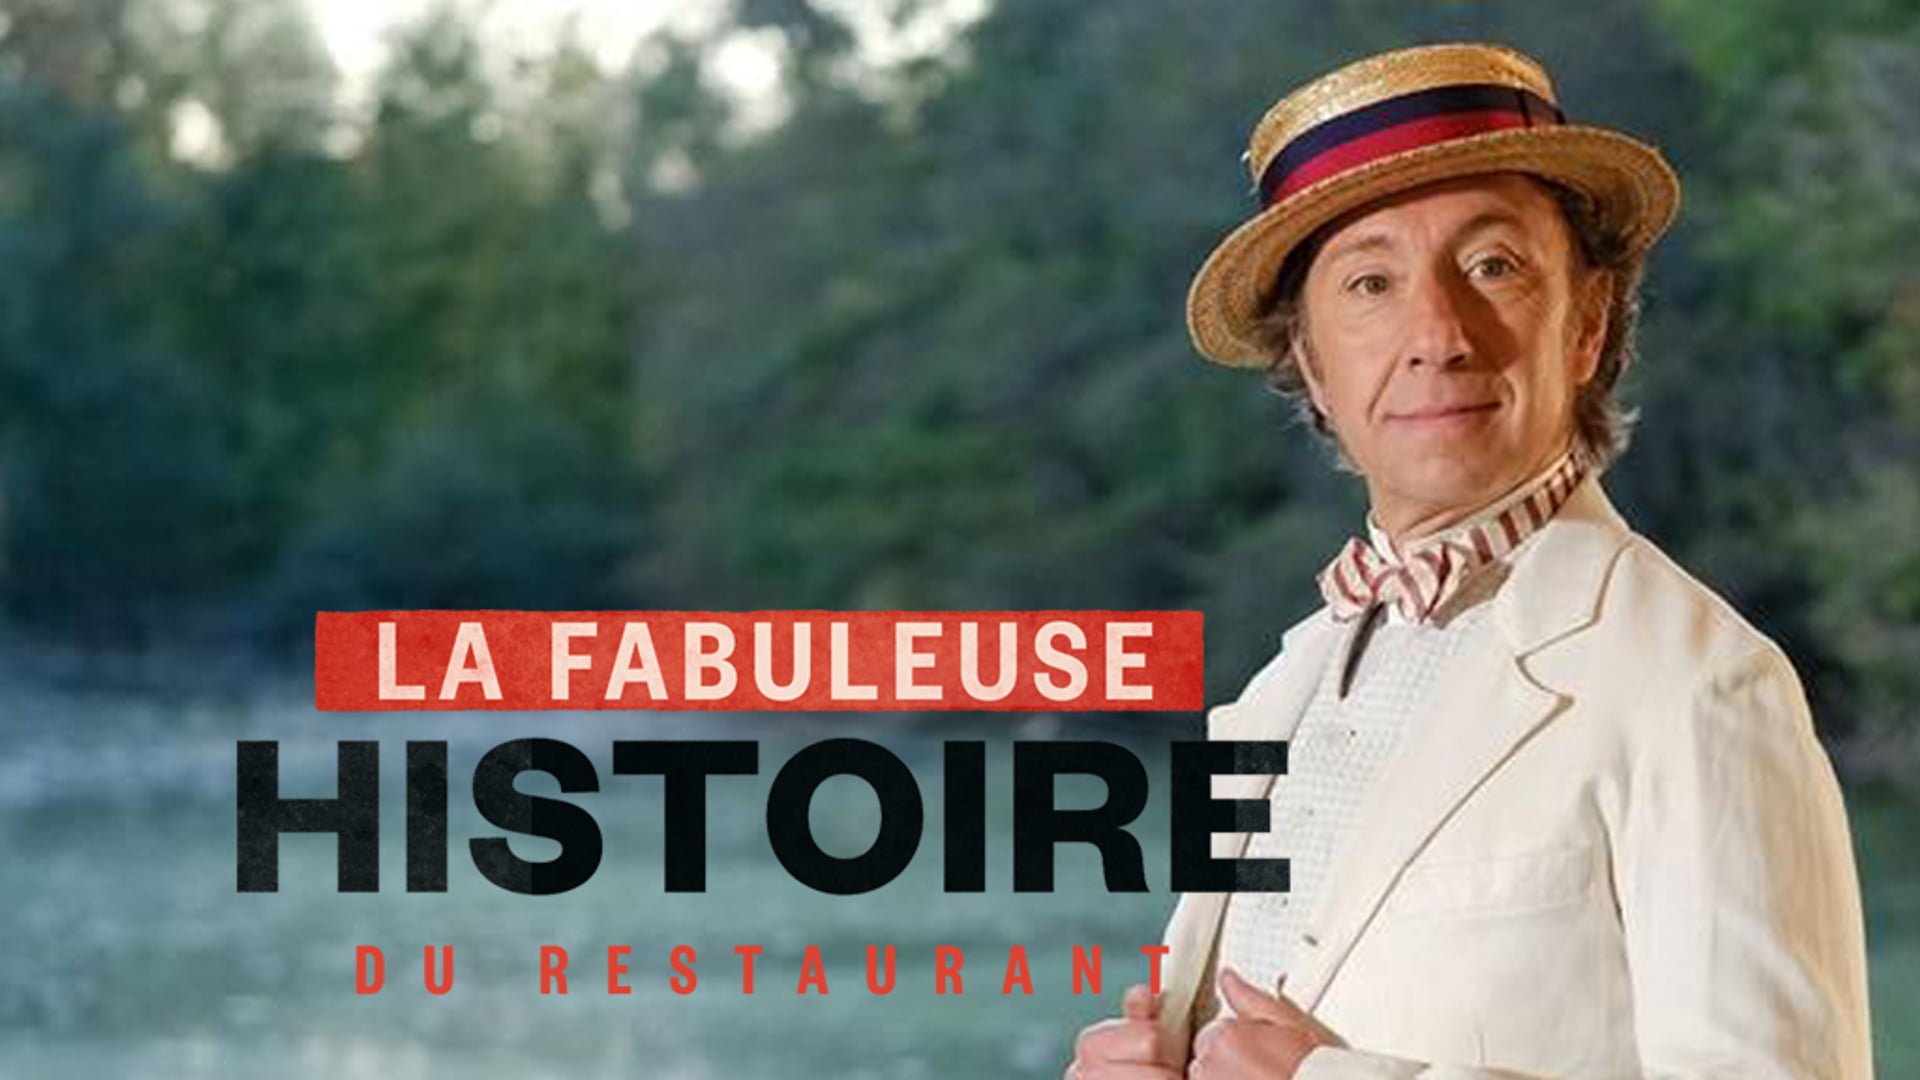 La fabuleuse histoire du restaurant • Prime Time 110' (France 2 / Capa)